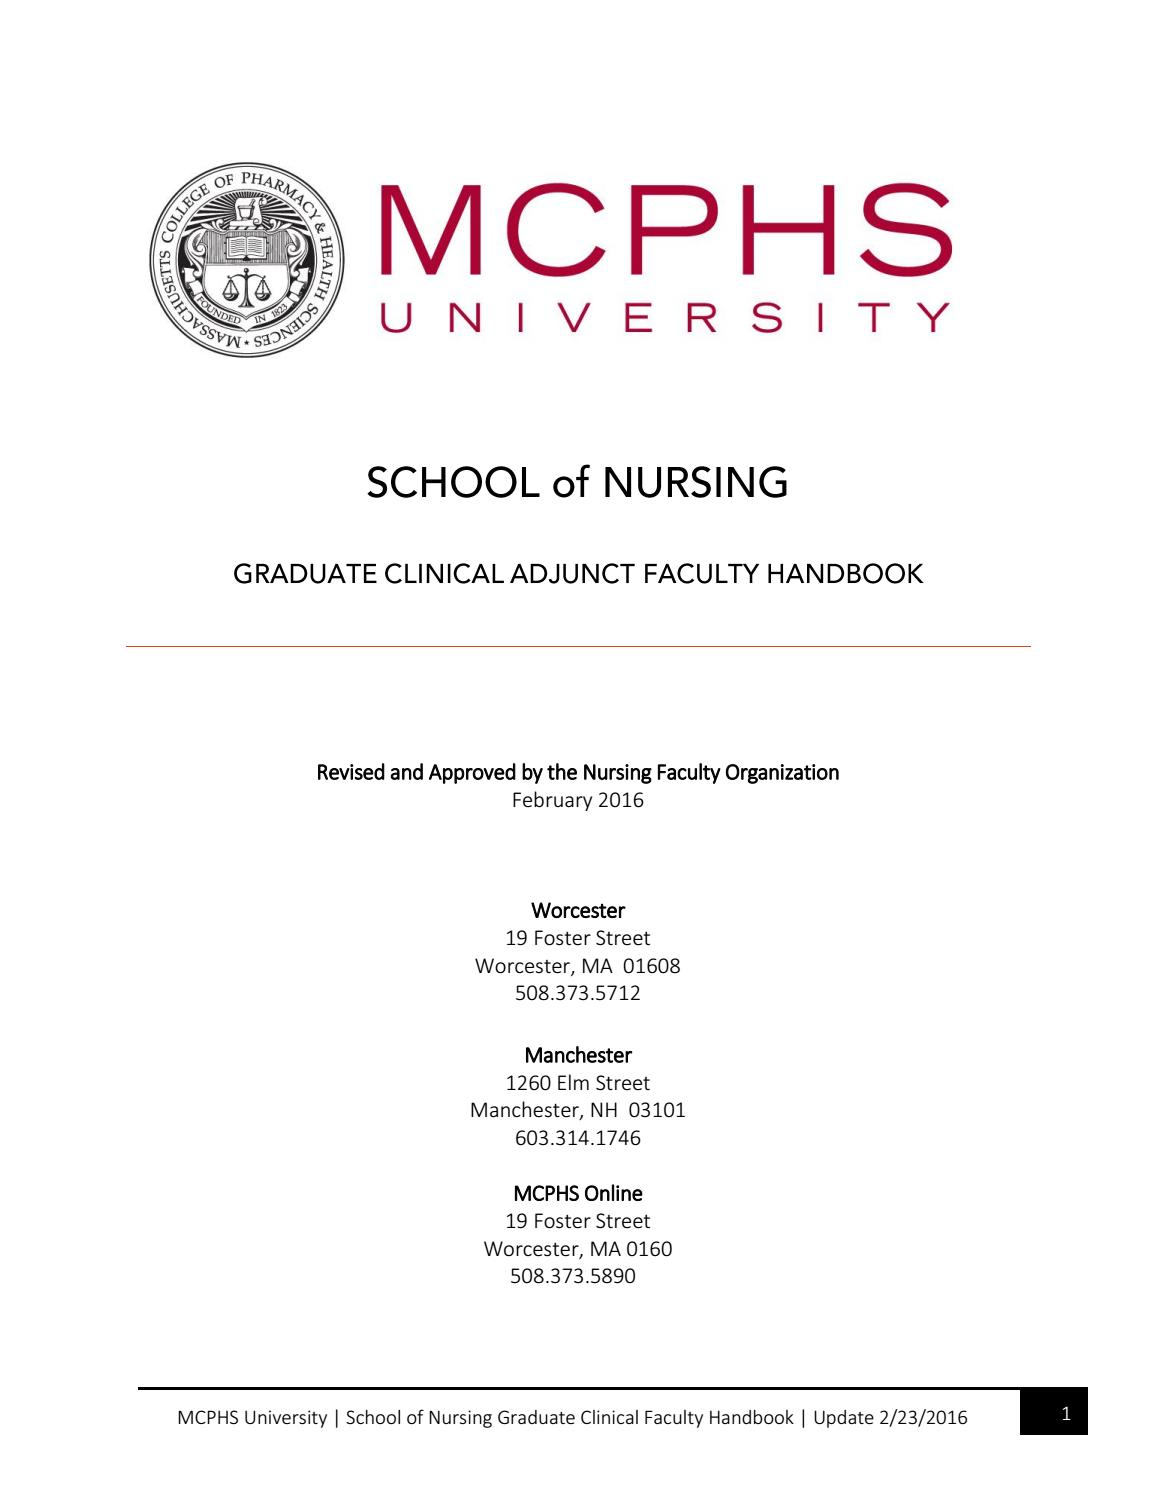 Graduate Clinical Faculty Handbook 2232016 Mcphs inside dimensions 1156 X 1496